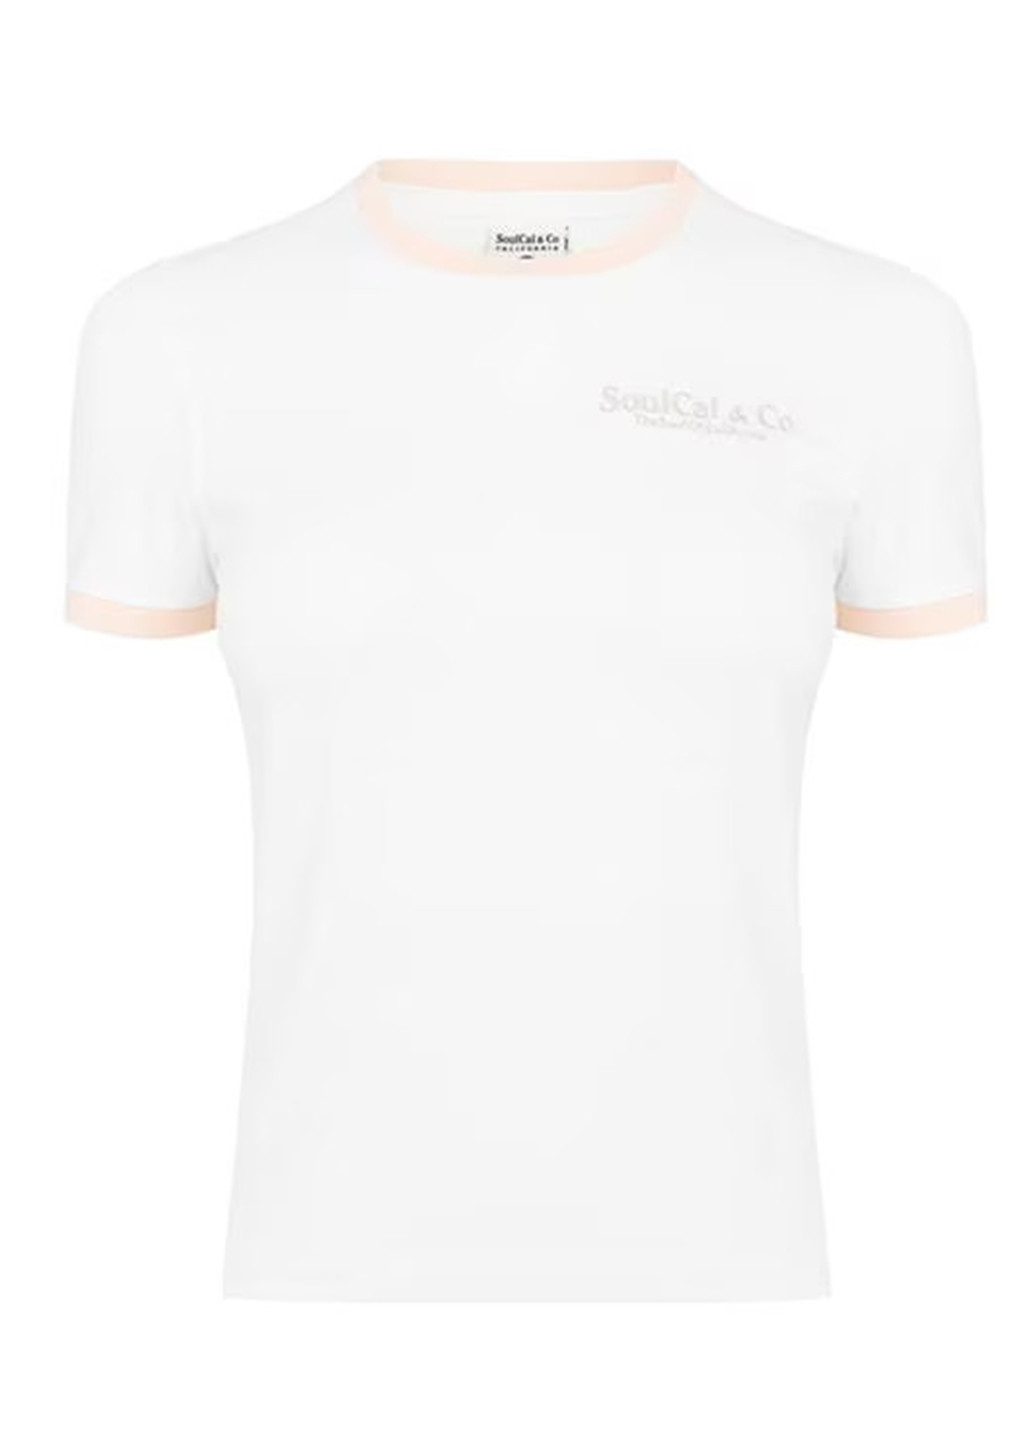 Белая летняя футболка Soulcal & Co